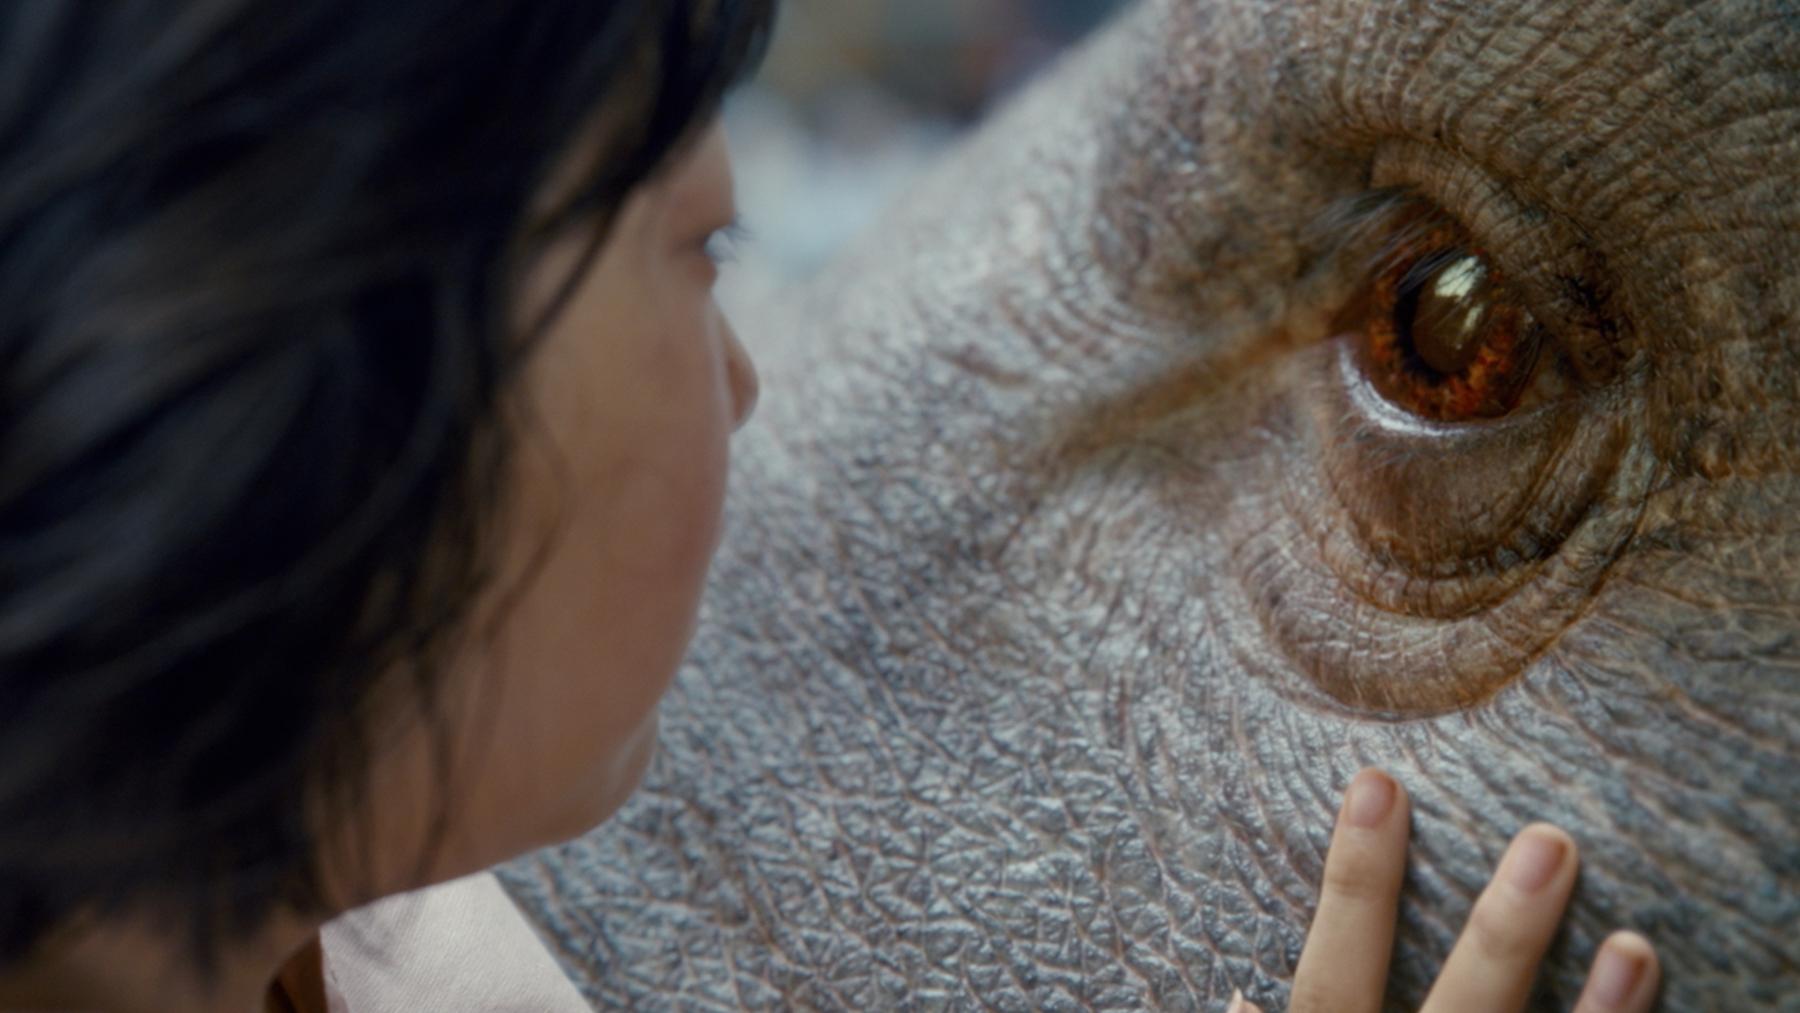 The movie's protagonist Mija forms a deep bond with her giant pet Okja.